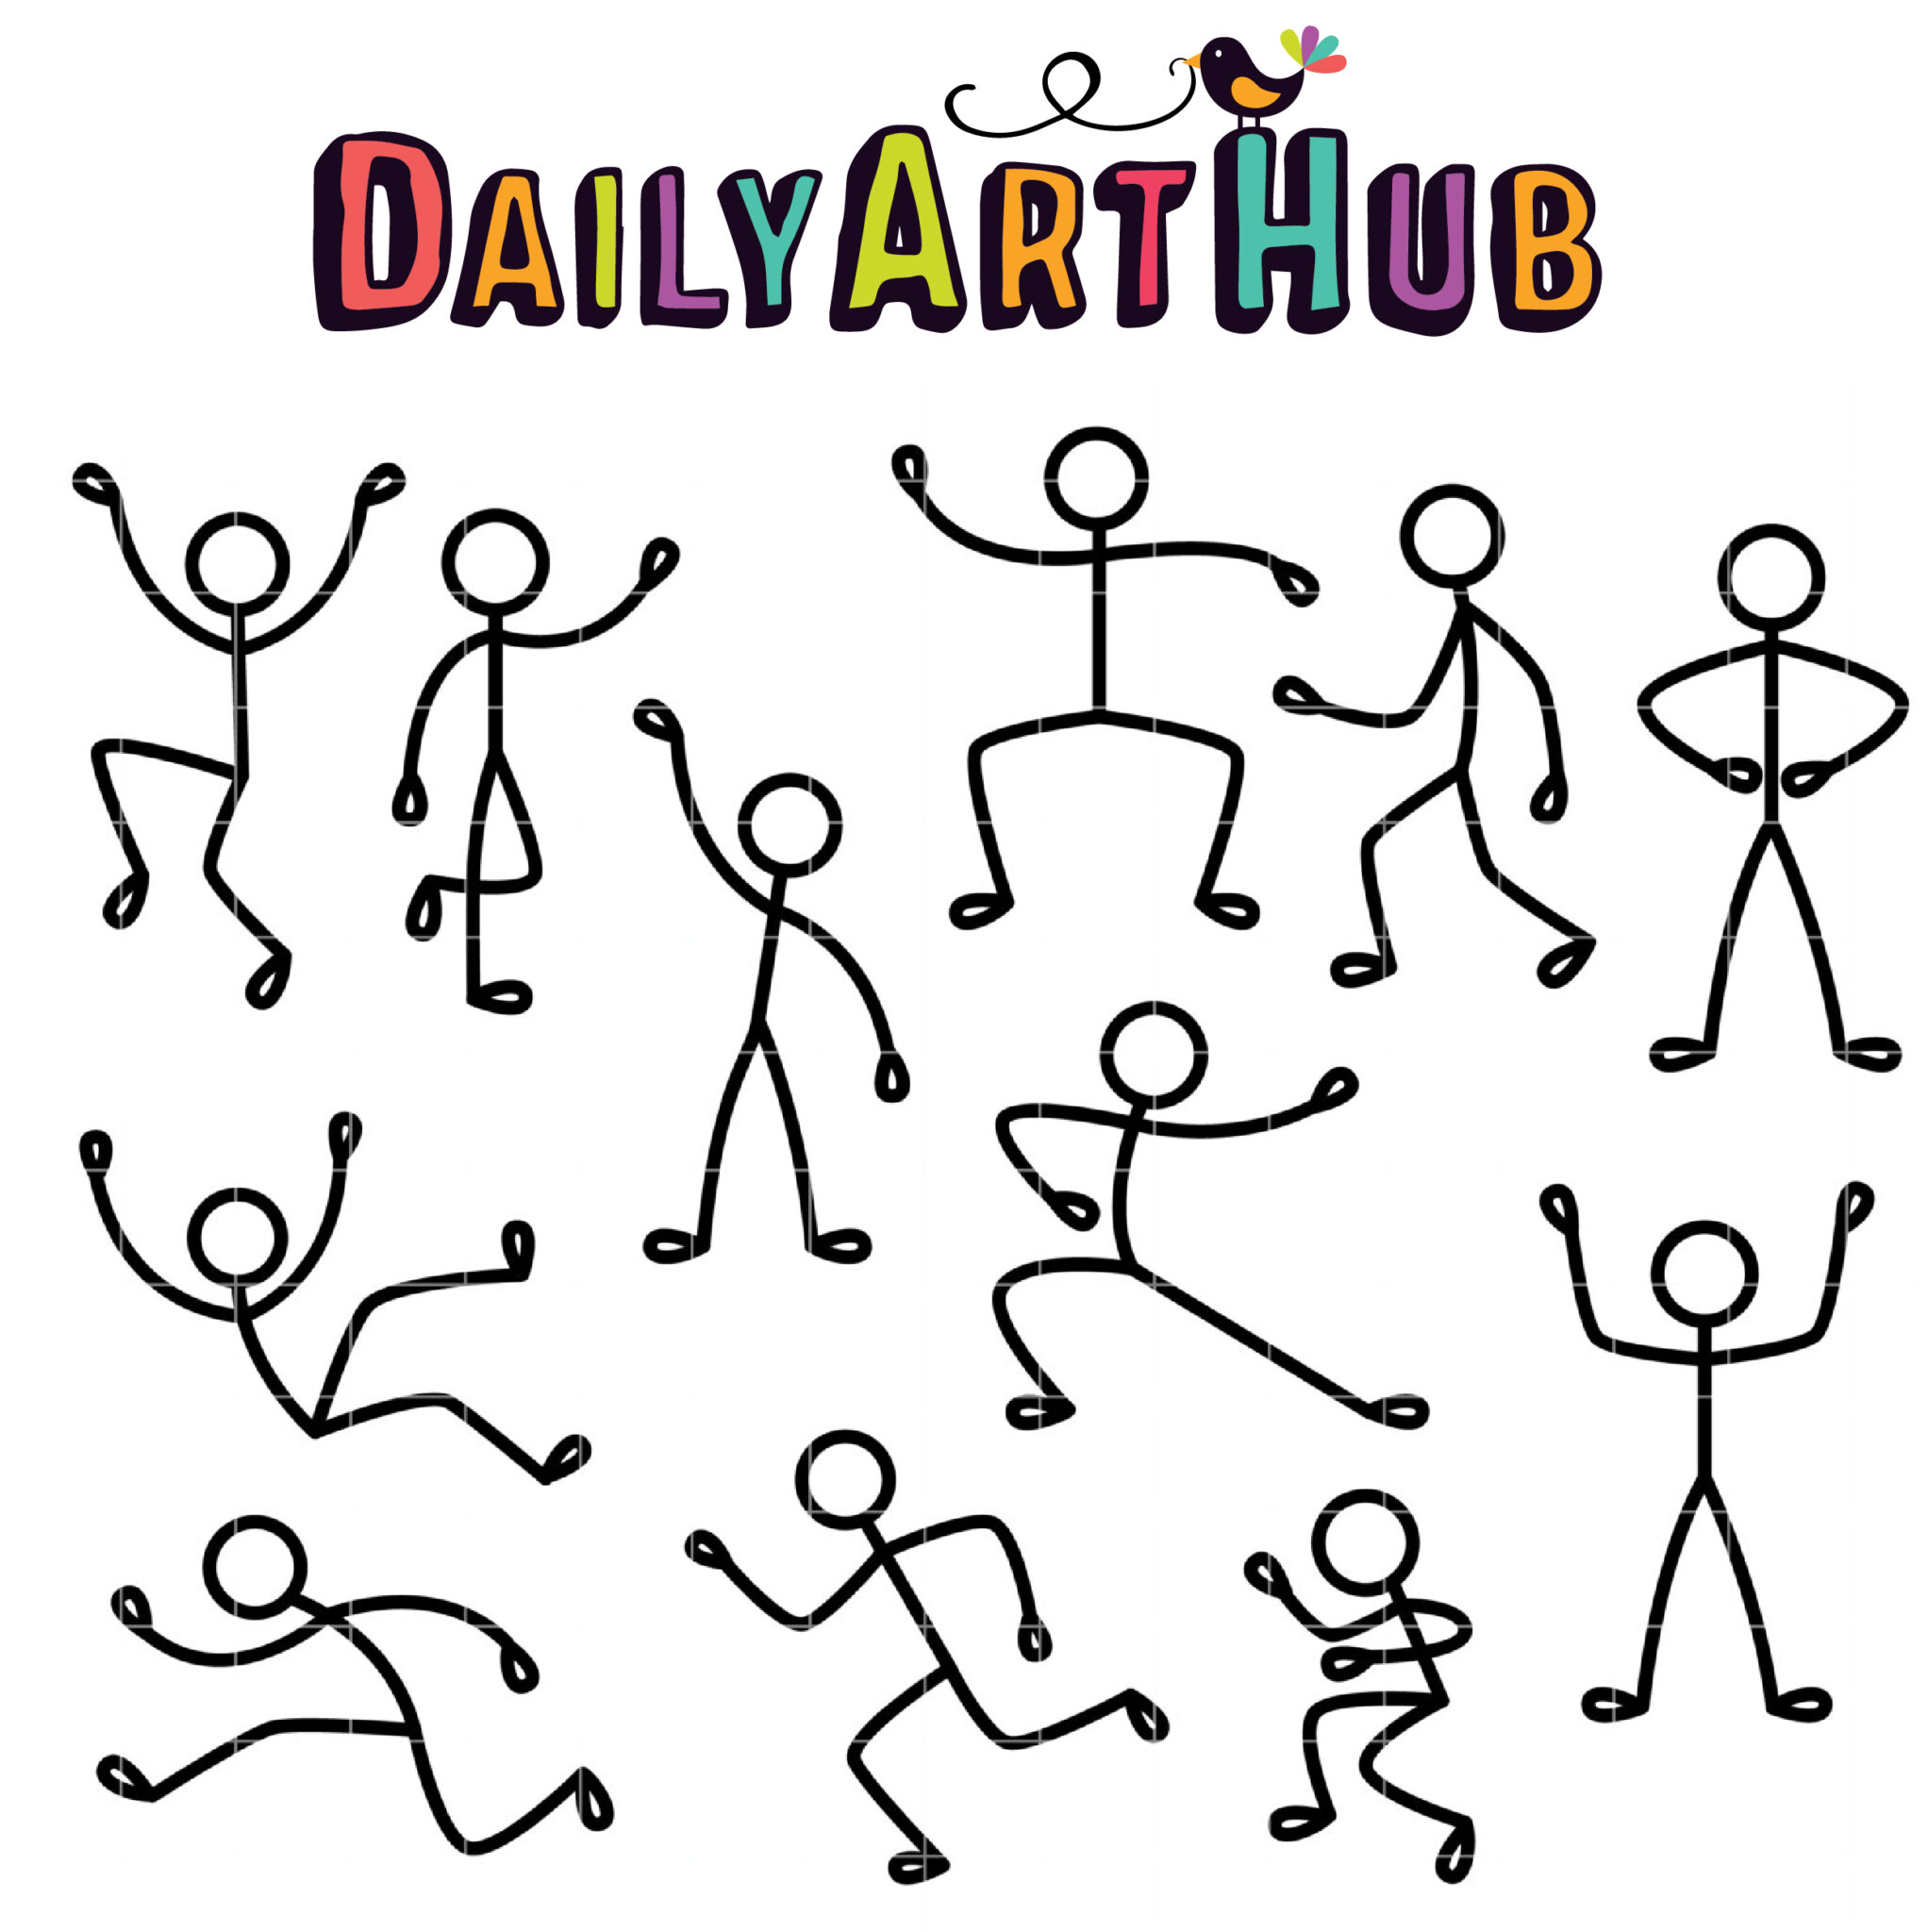 Stickman Gestures Clip Art Set – Daily Art Hub // Graphics, Alphabets & SVG